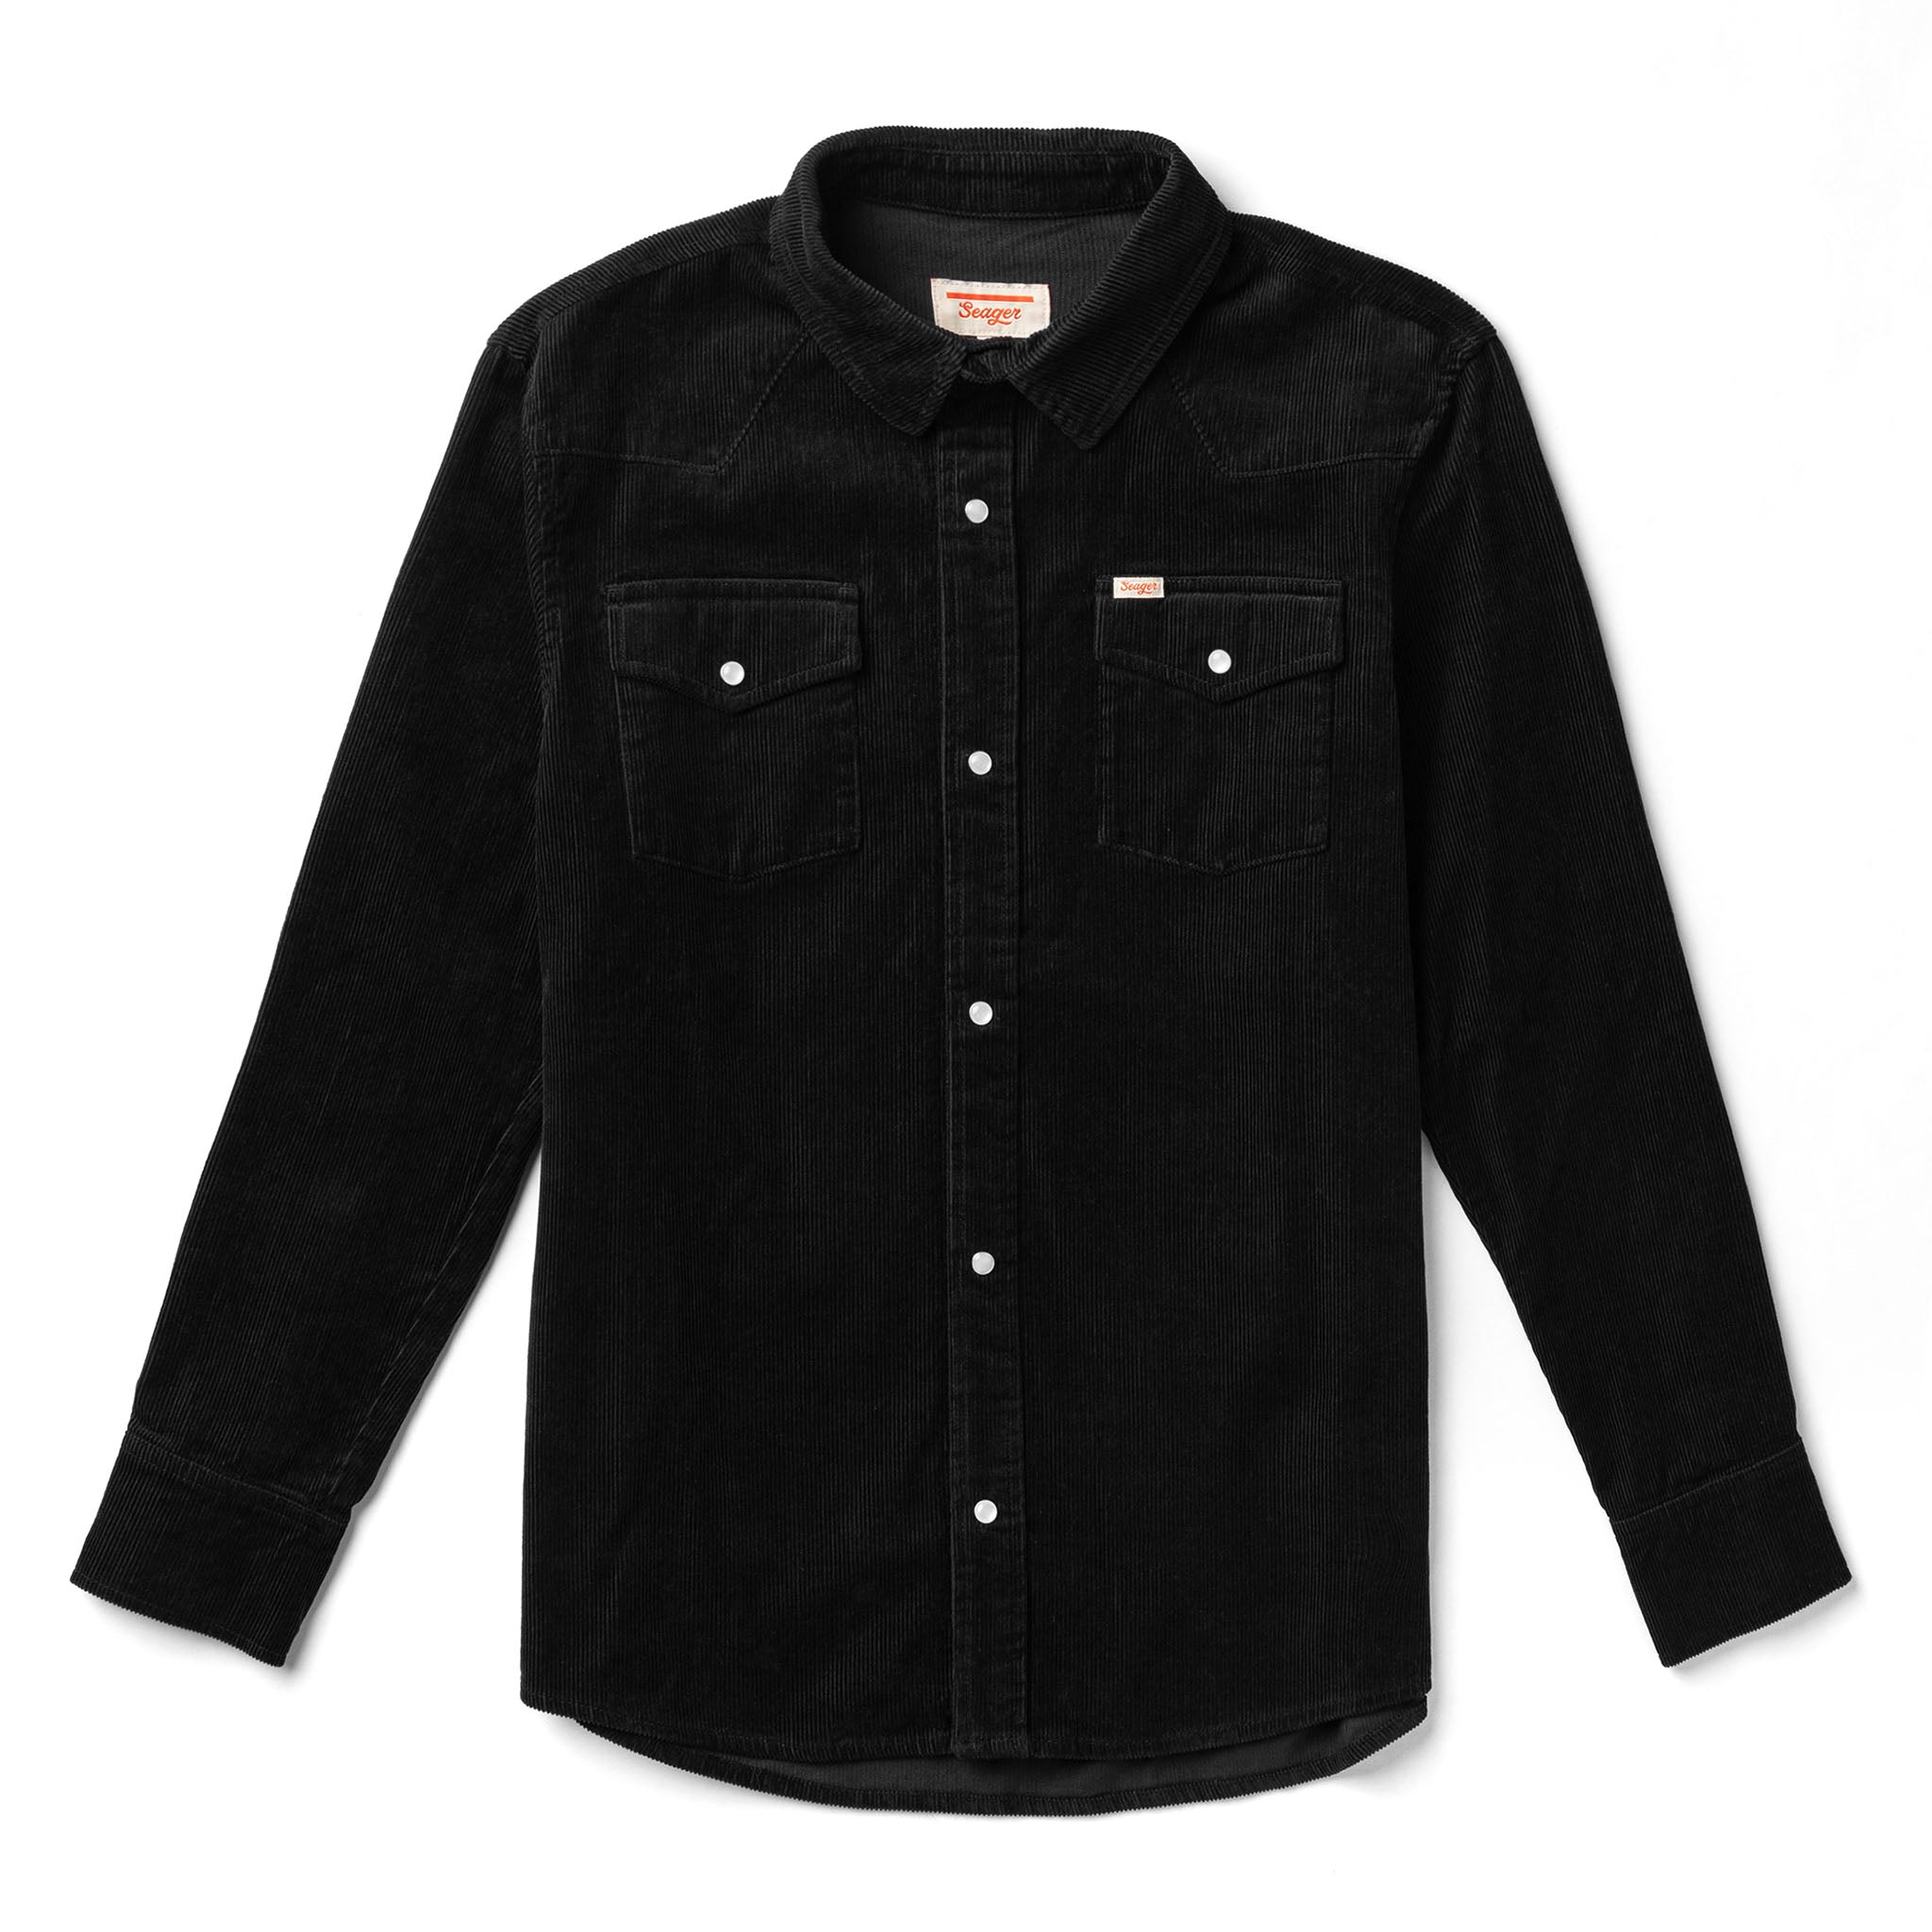 Reagan Pearl Snap Cord Black - 100% Cotton Corduroy Western Button Up Shirt, S